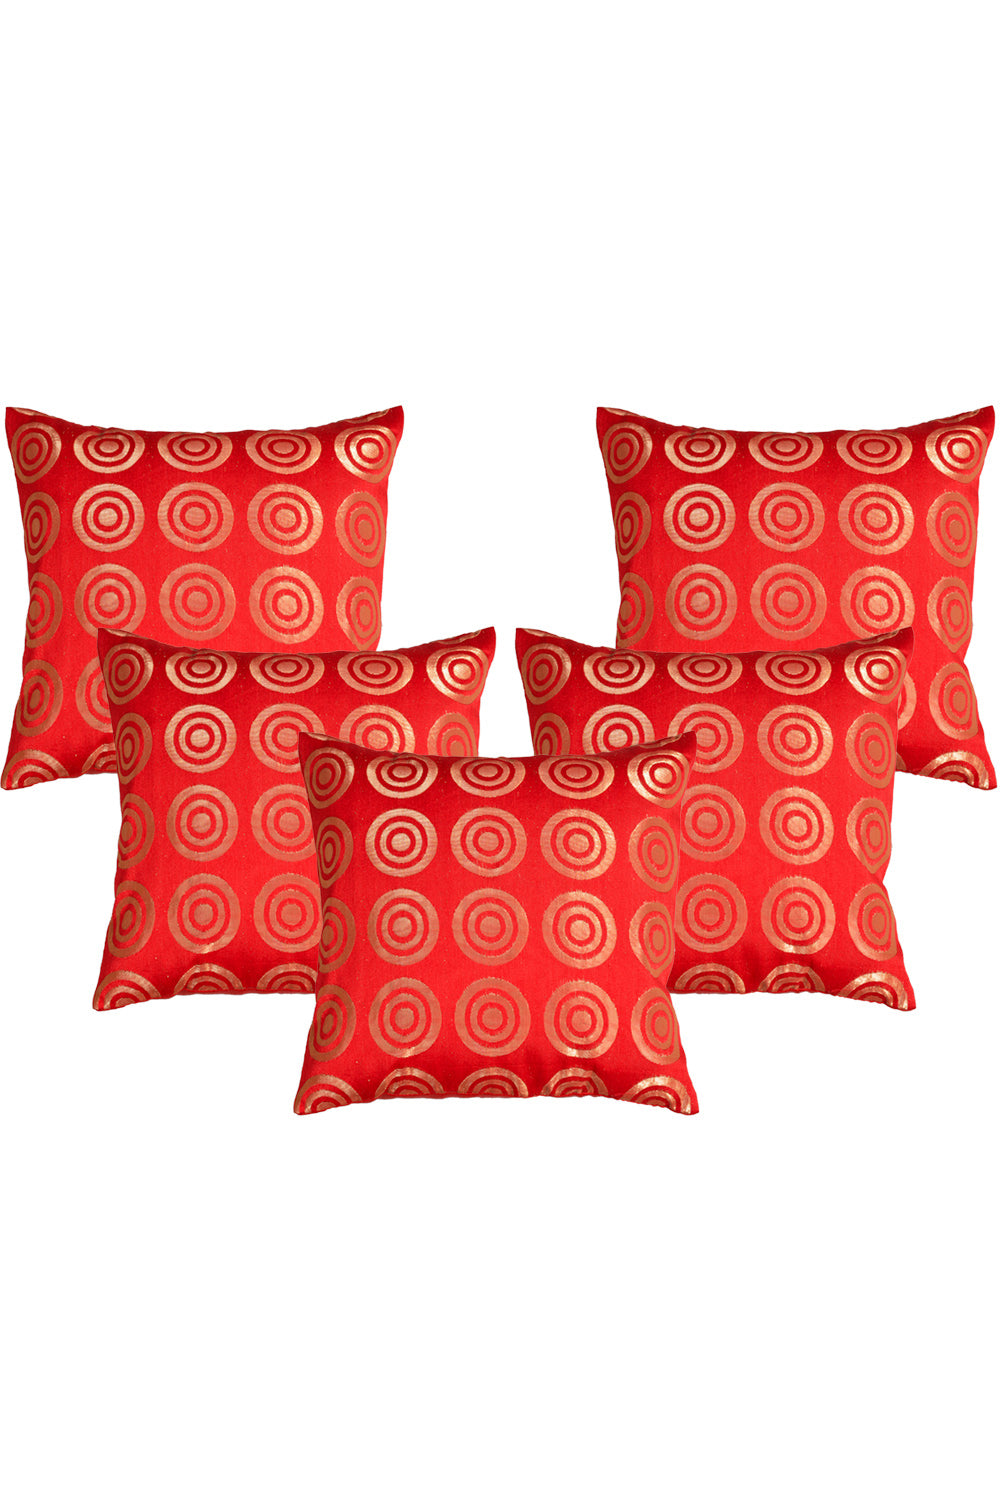 Silkfab Set 0f 5 Decorative Silk Cushion Covers (16x16) Circle Red - SILKFAB